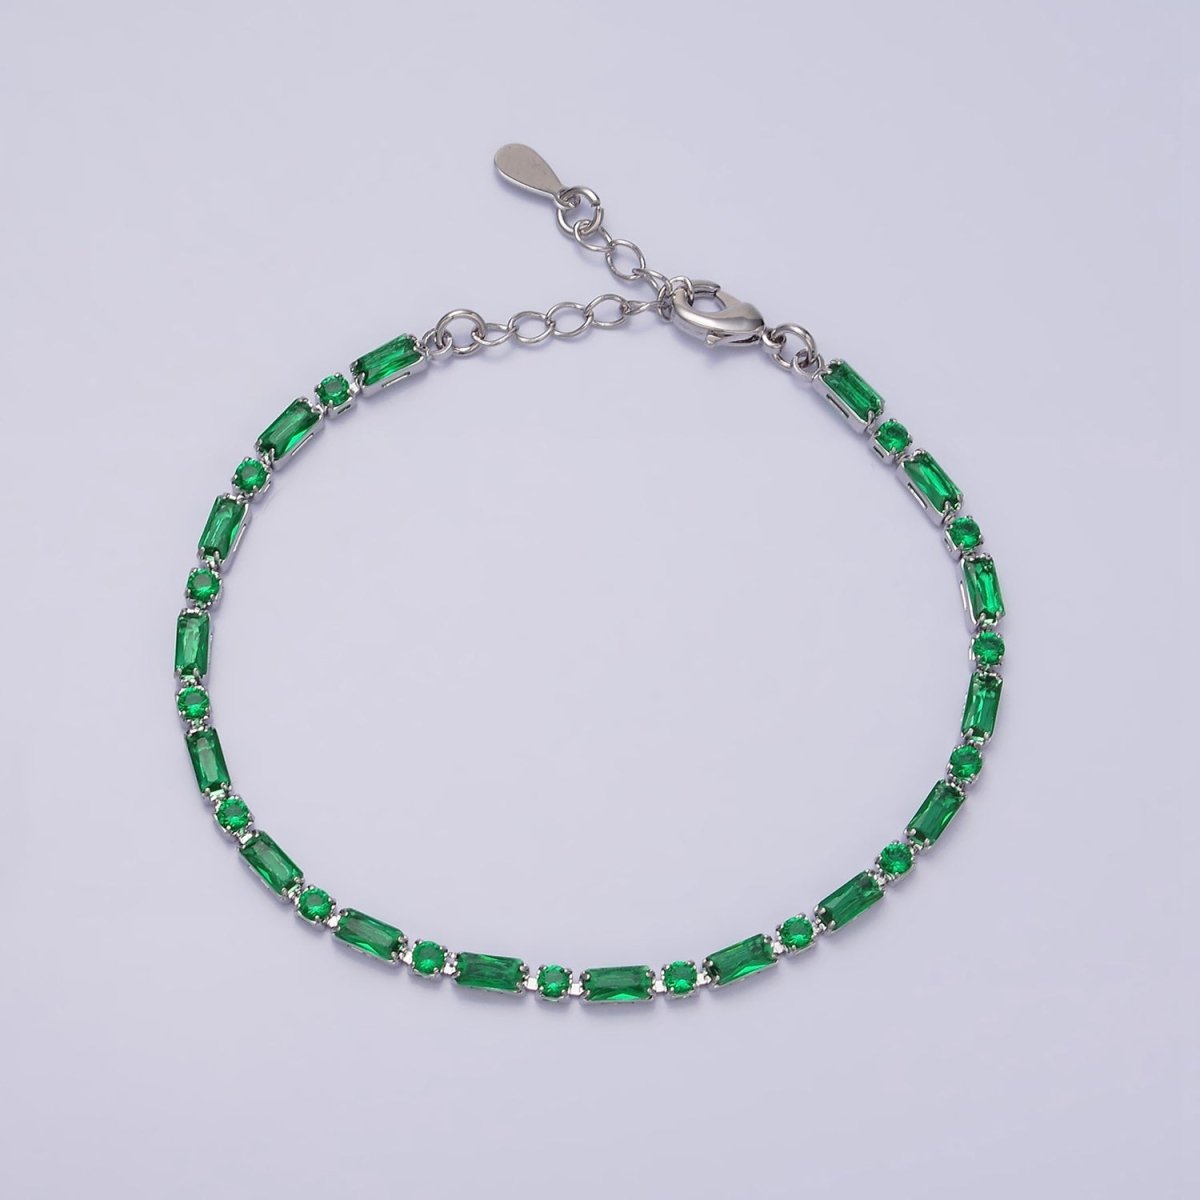 Dainty Gold Filled Tennis Bracelet Emerald Green Mix Baguette Round Clear Pink Green Cubic Zirconia Link Tennis Bracelet Minimalist Jewelry | WA-1824 - WA-1829 Clearance Pricing - DLUXCA